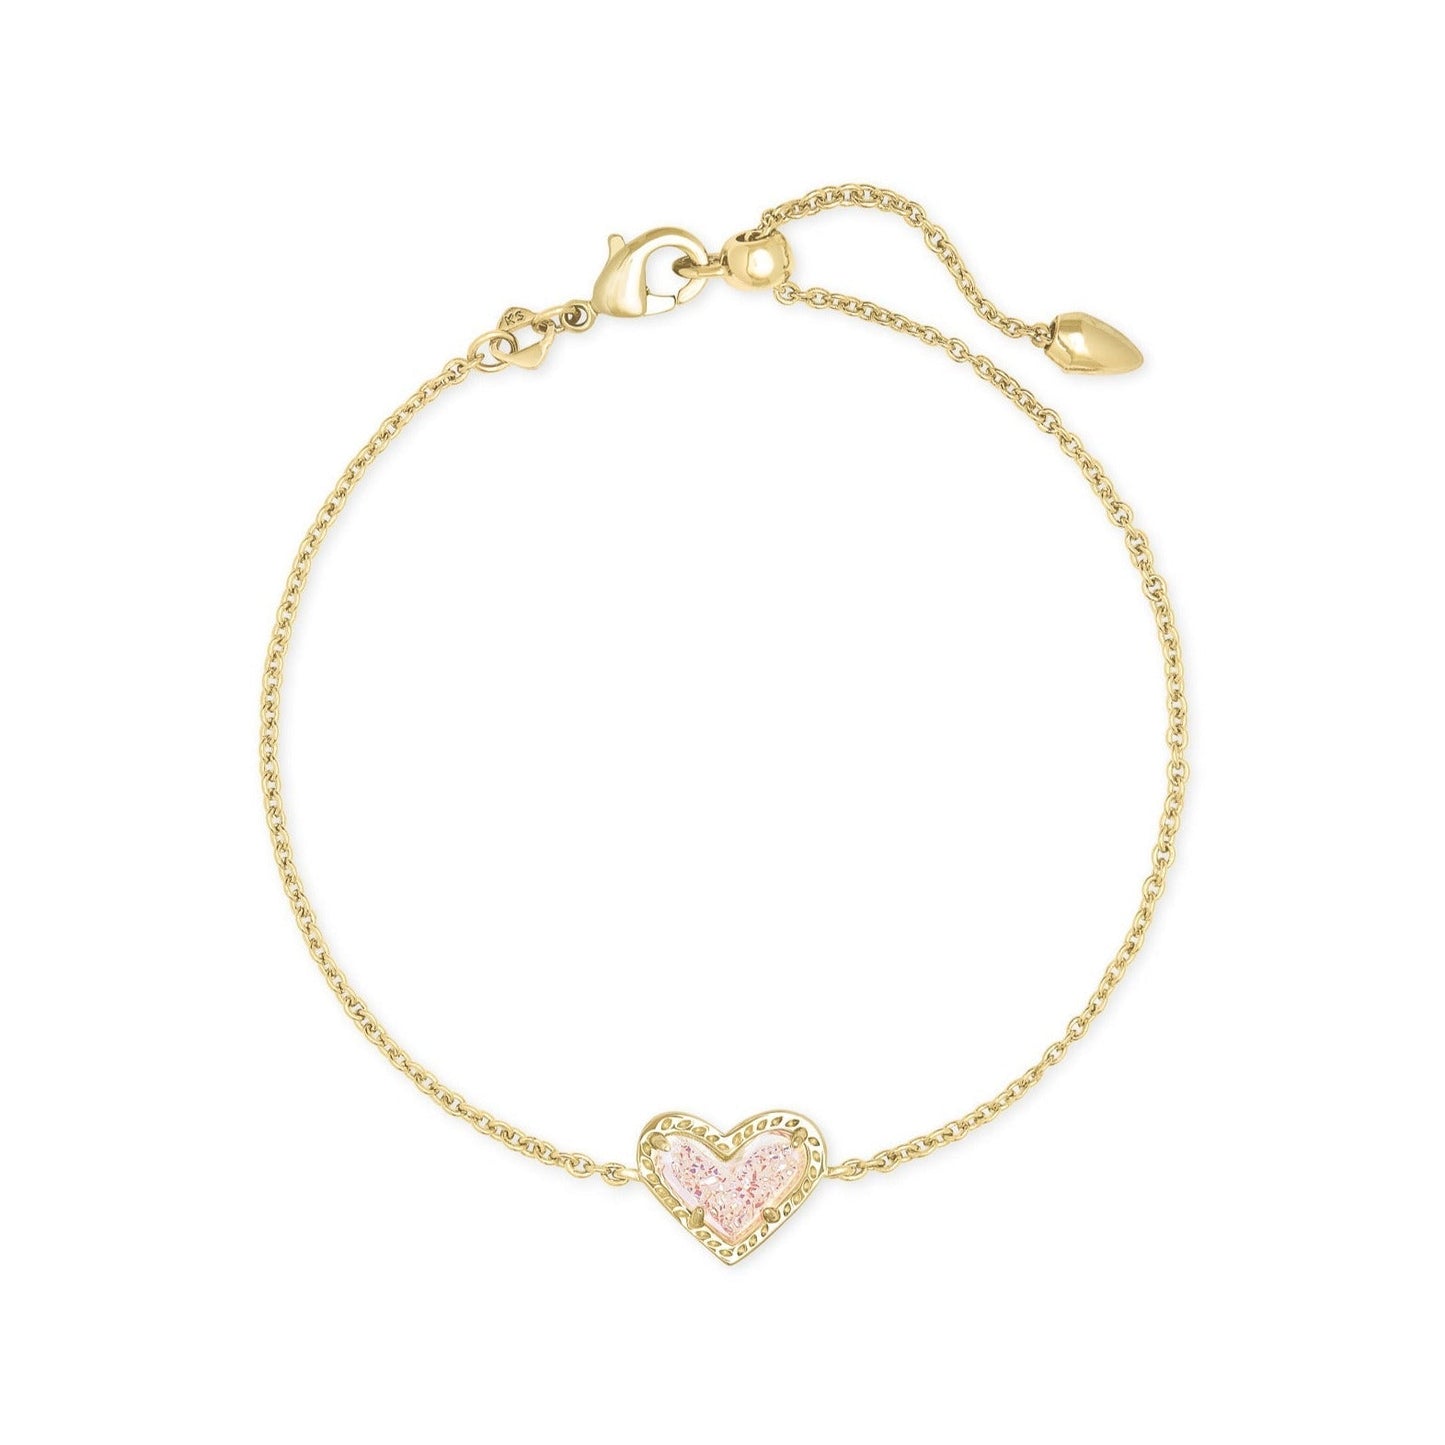 Kendra Scott Ari Heart Delicate Chain Bracelet in Gold Iridescent Drusy